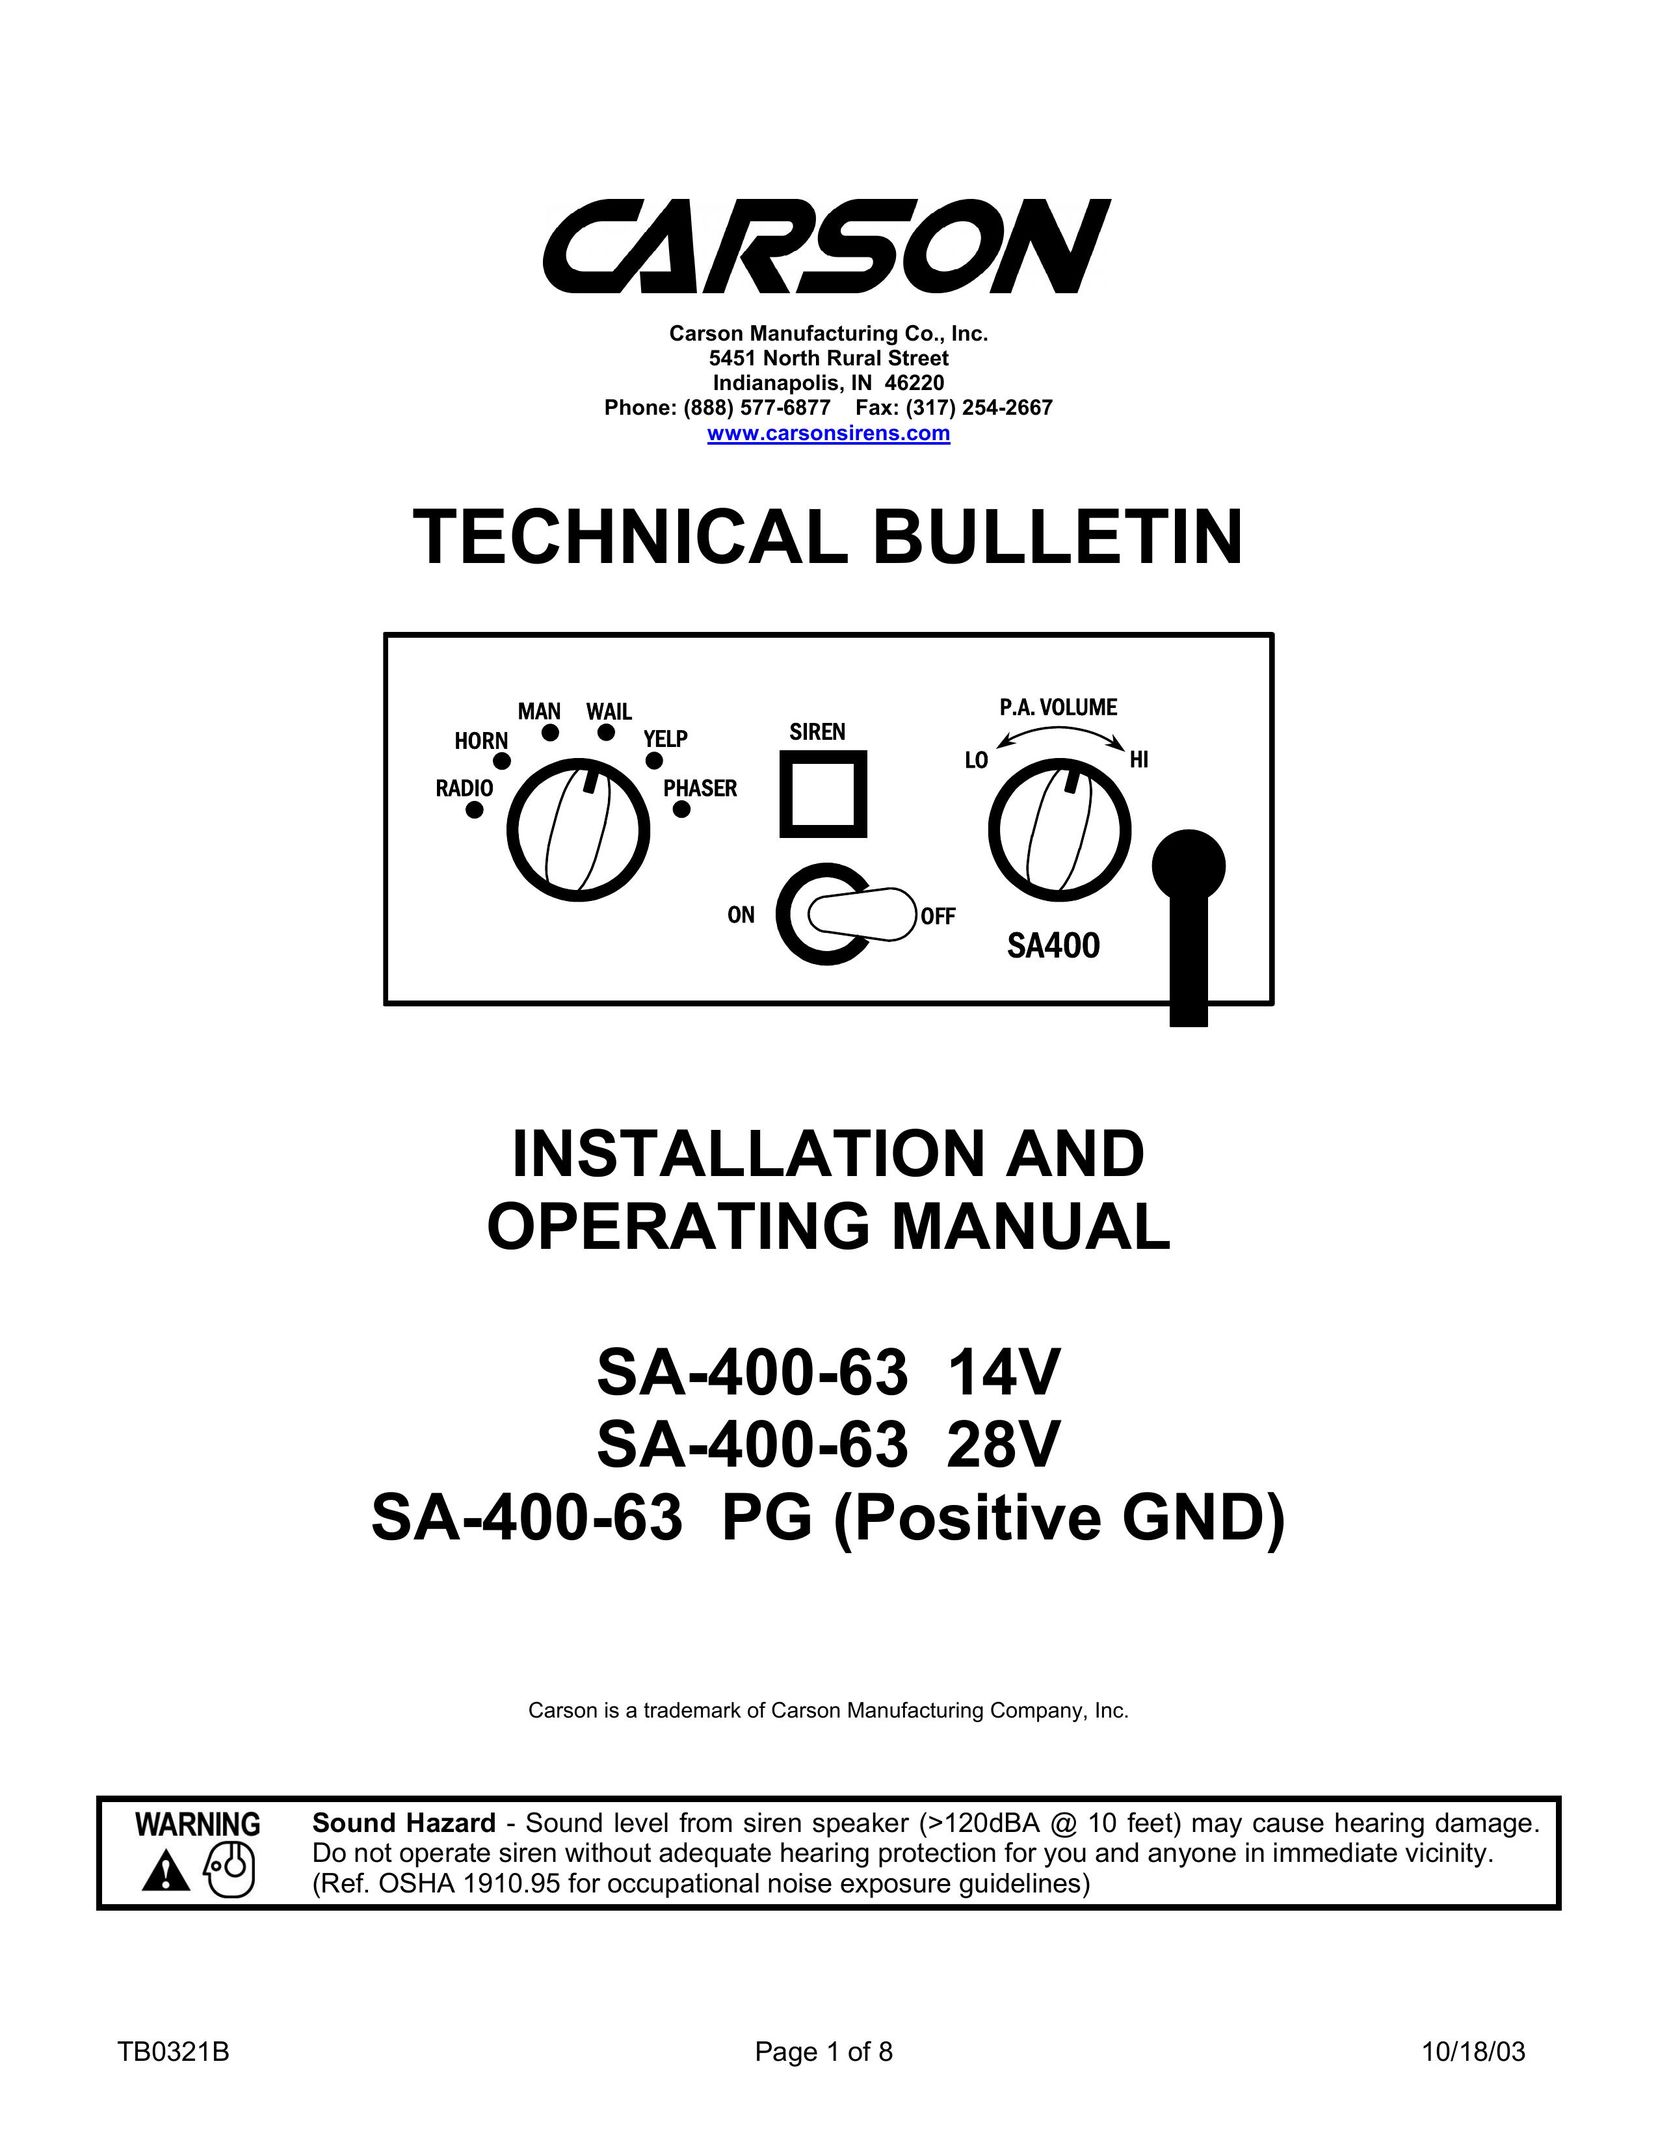 Carson SA-400-63 PG Stereo Amplifier User Manual